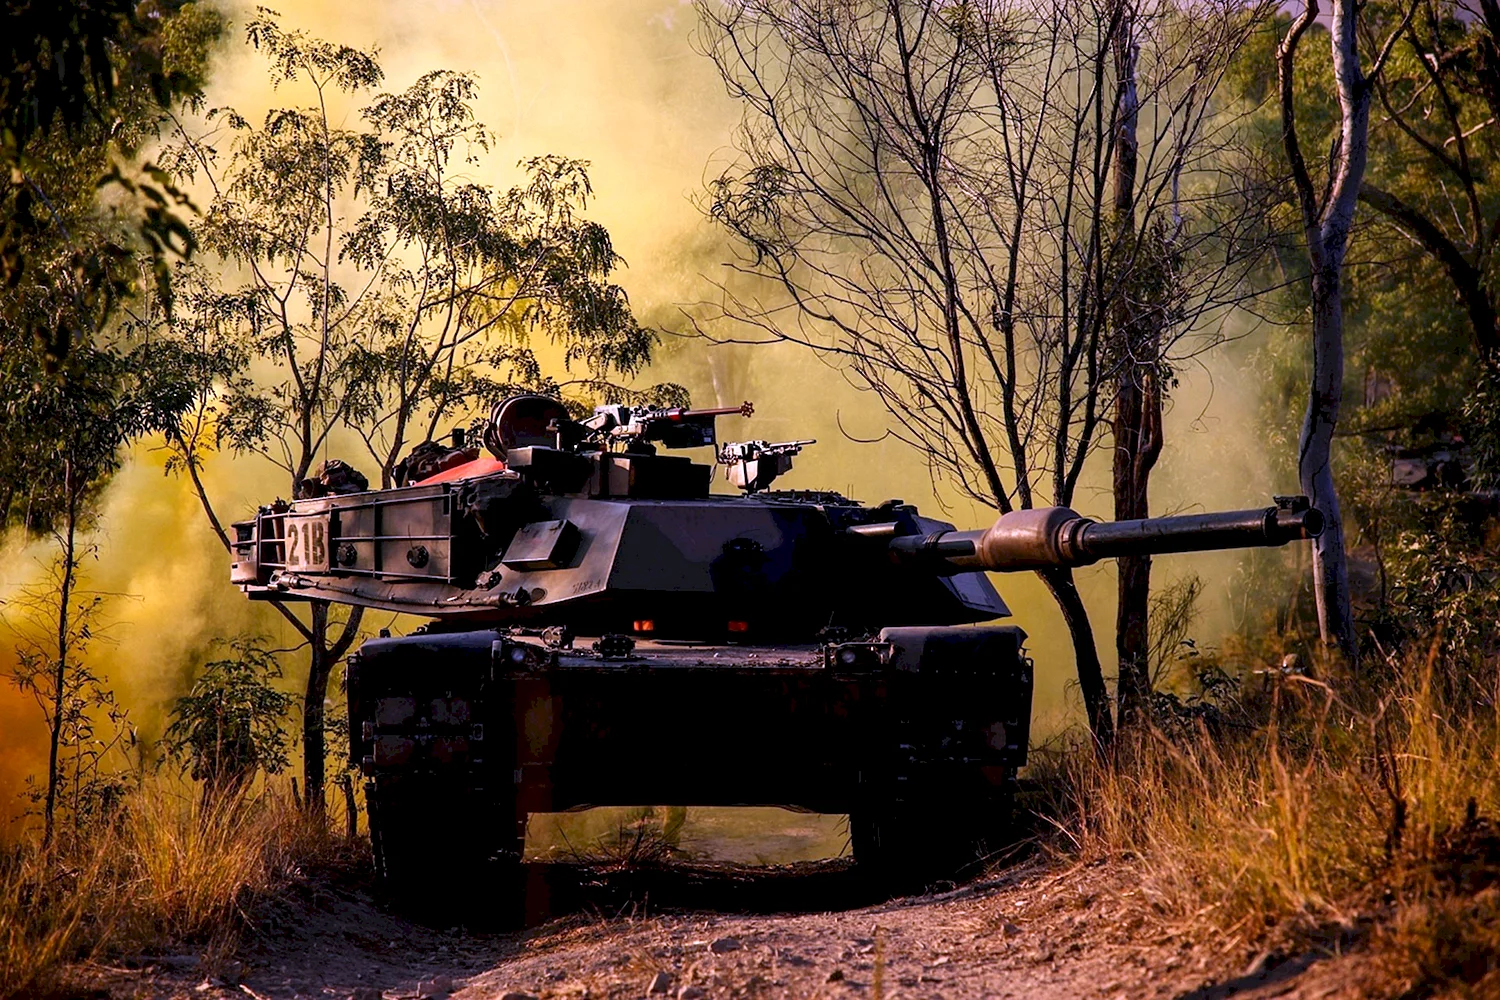 M1 Abrams 105mm